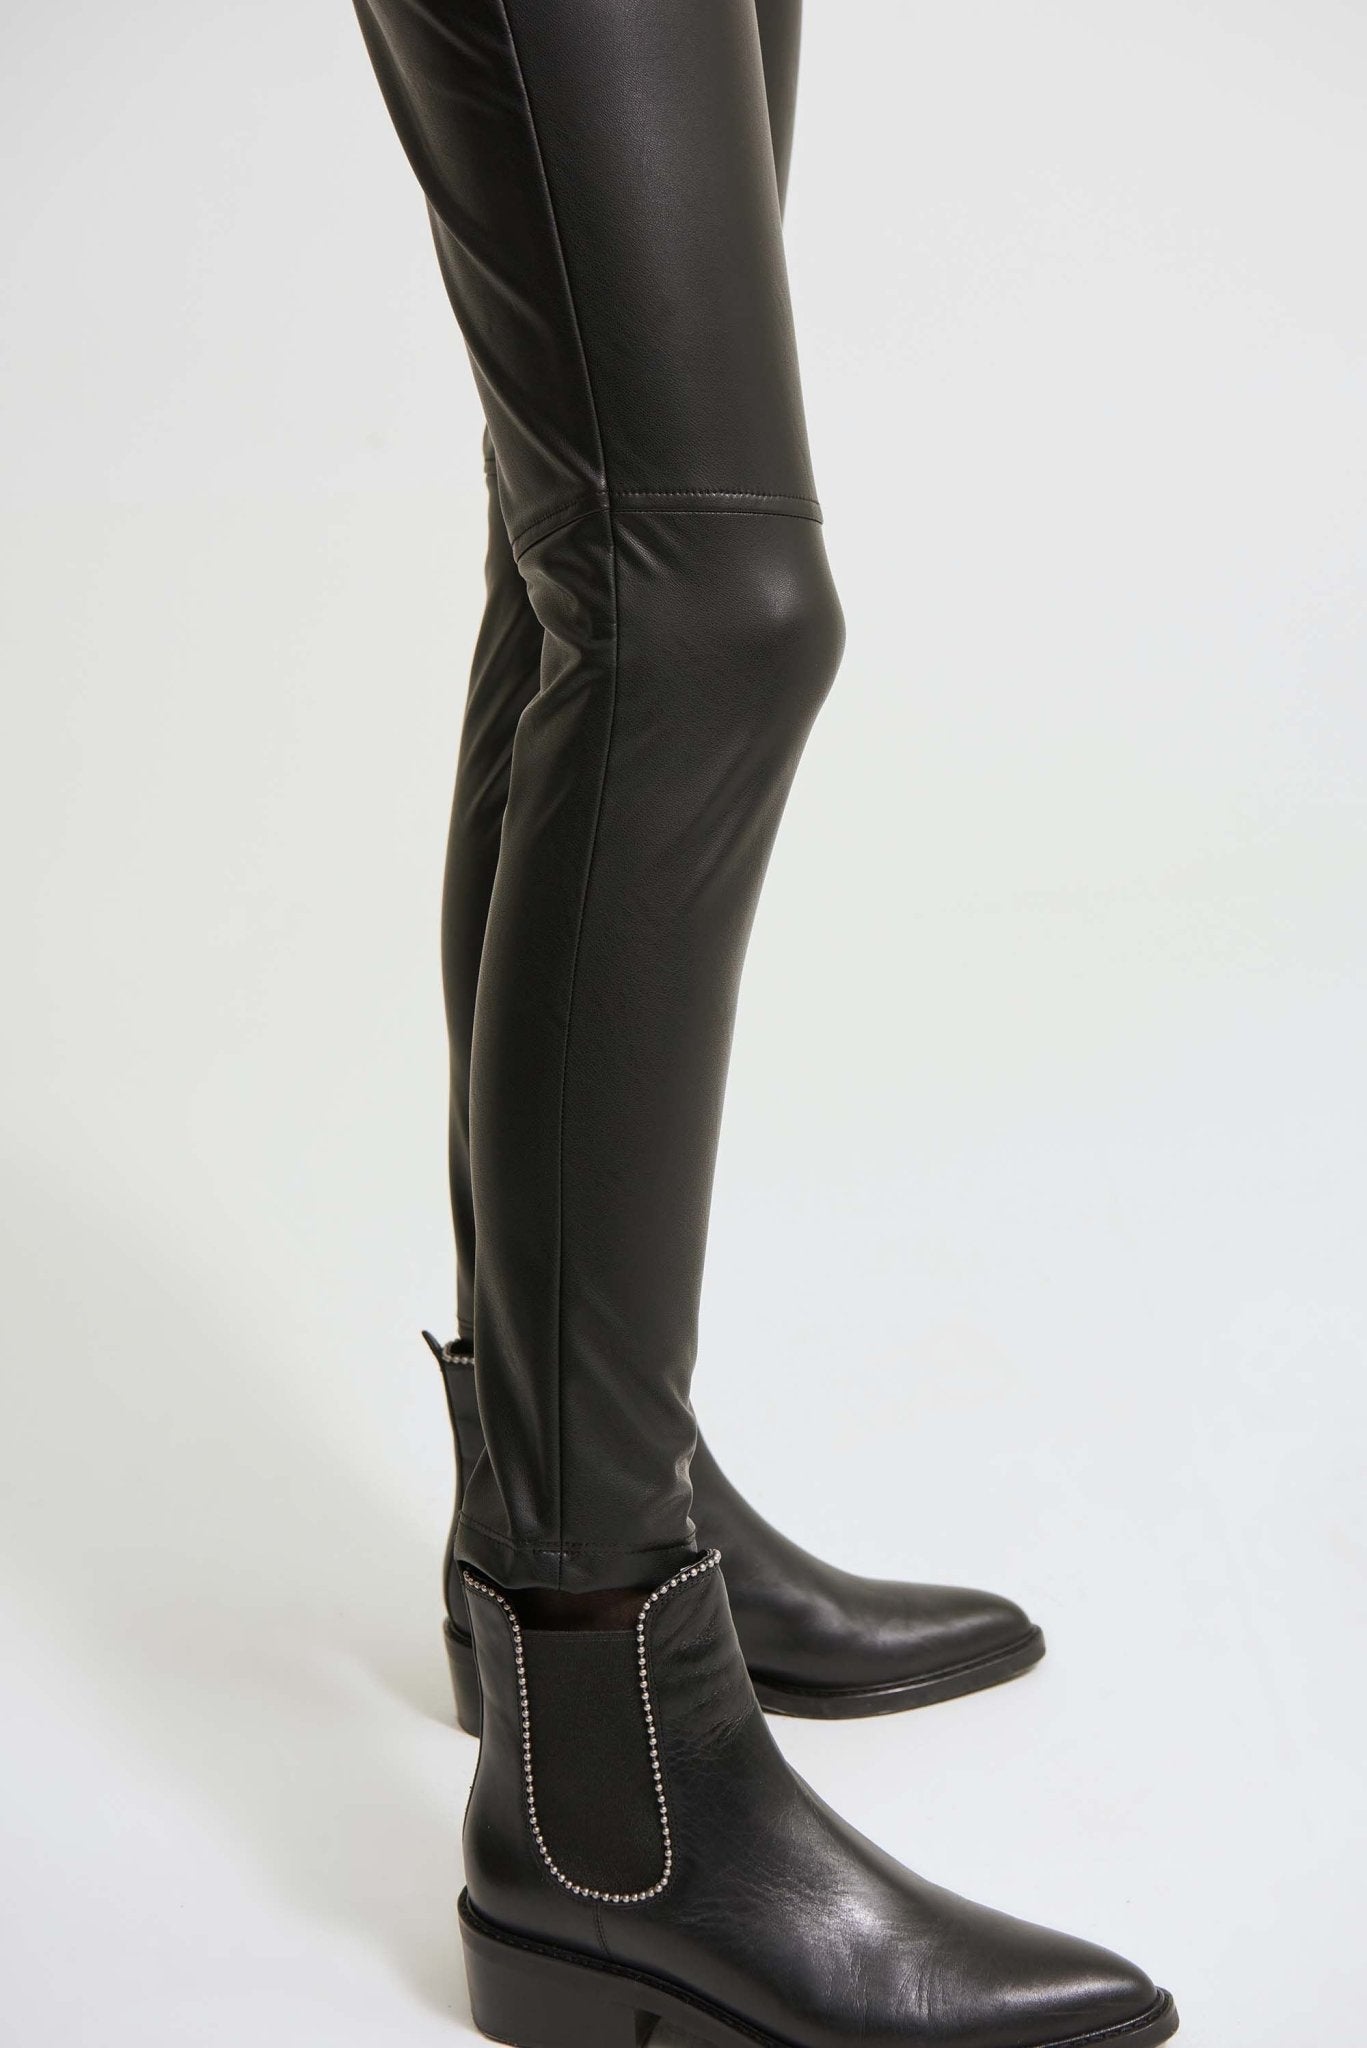 Shop Leatherette Legging Style 213422 - Joseph Ribkoff